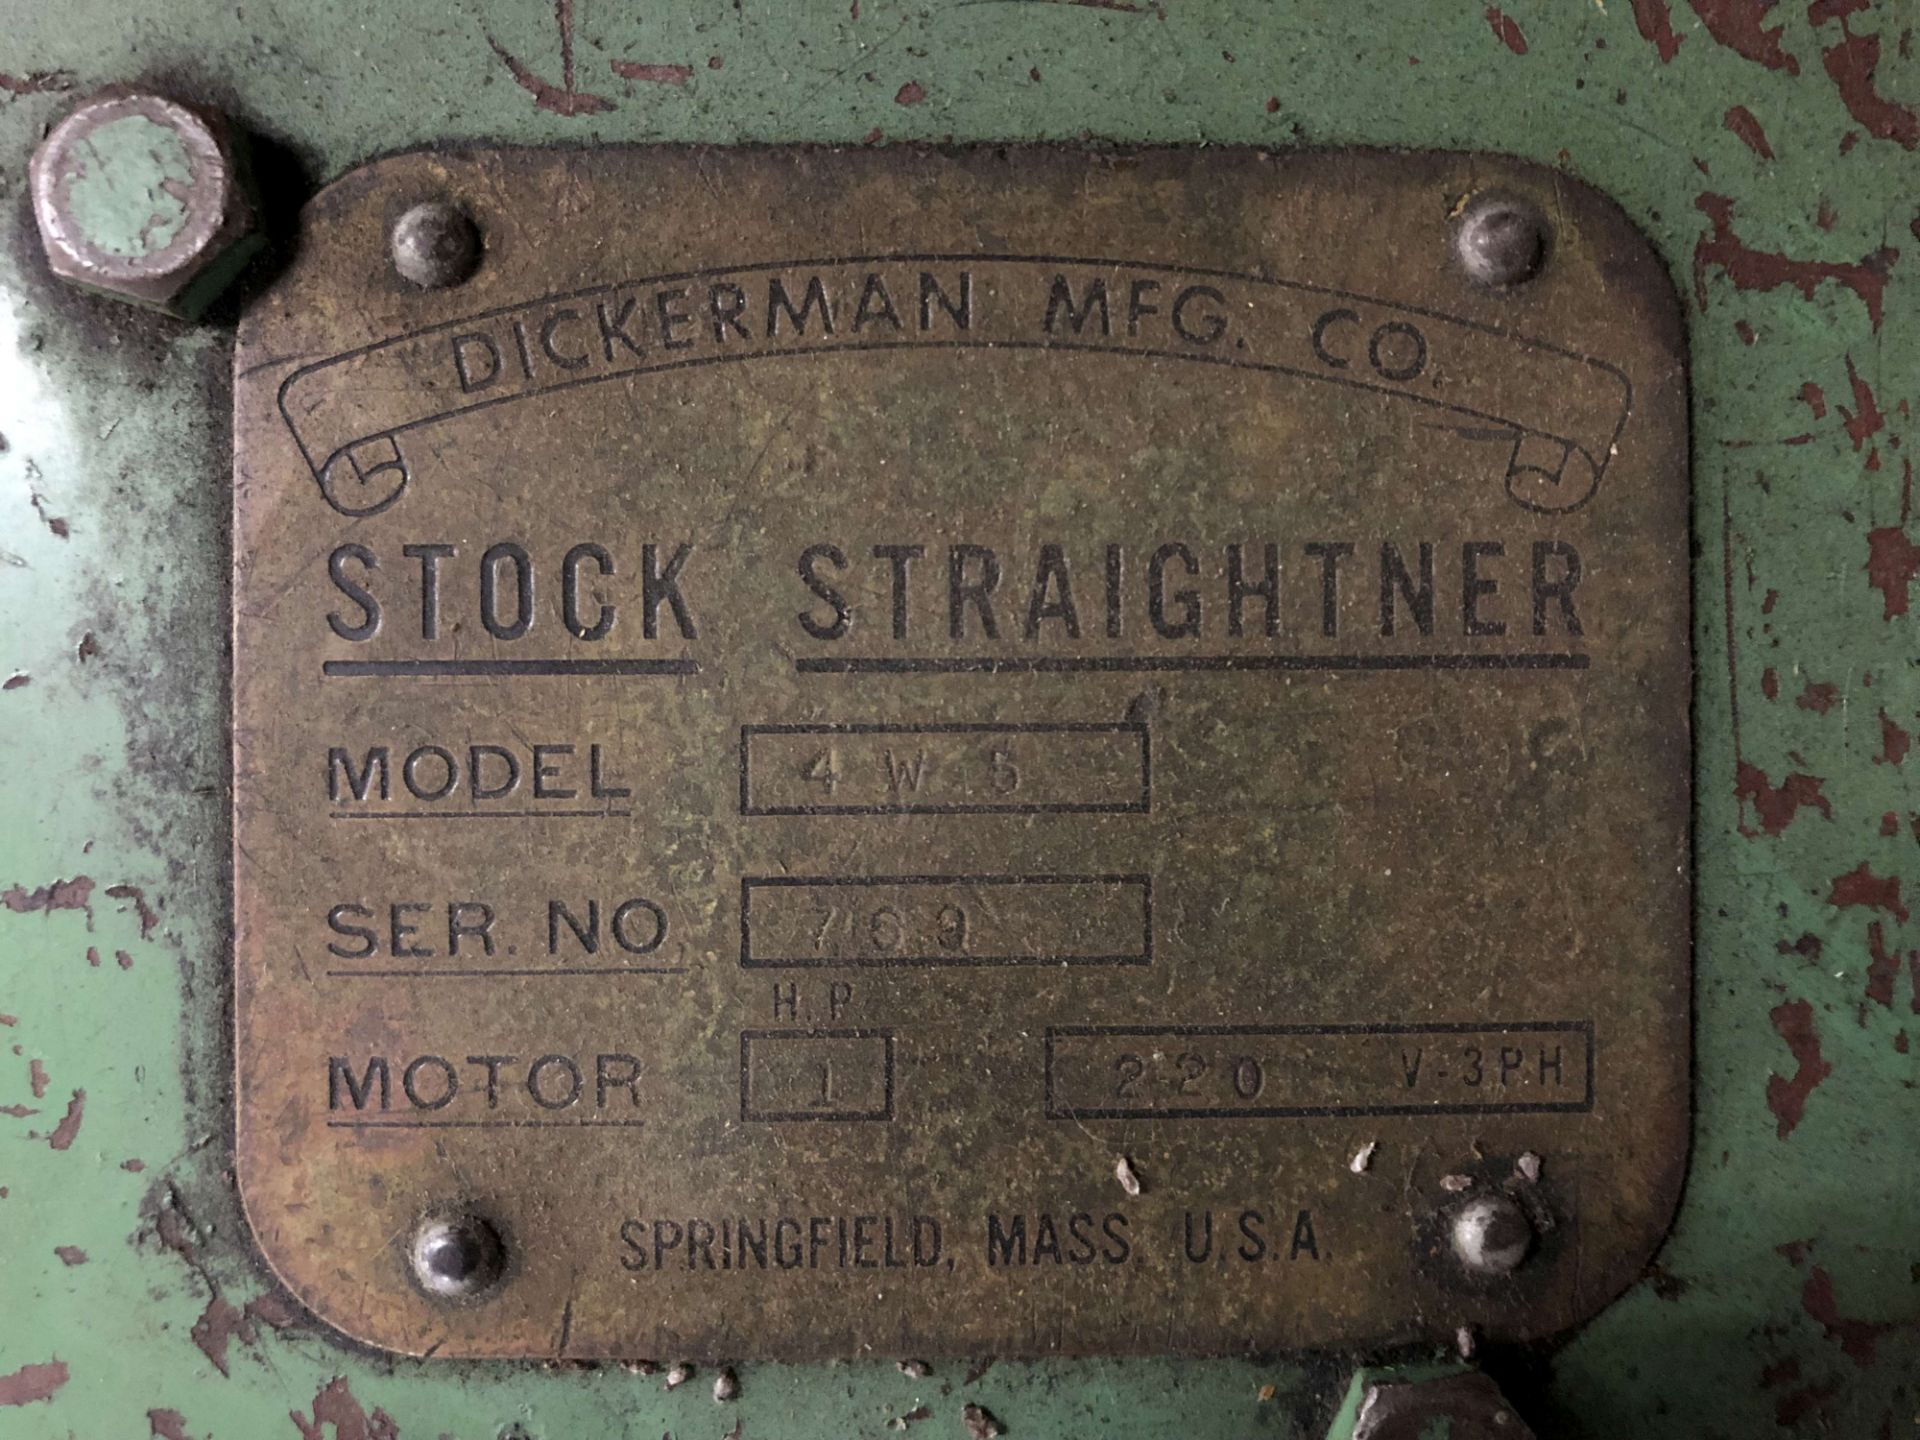 Dickerman Stock Straightener, 4" Max Coil Width, Model 4W5, 1 HP - Image 3 of 3